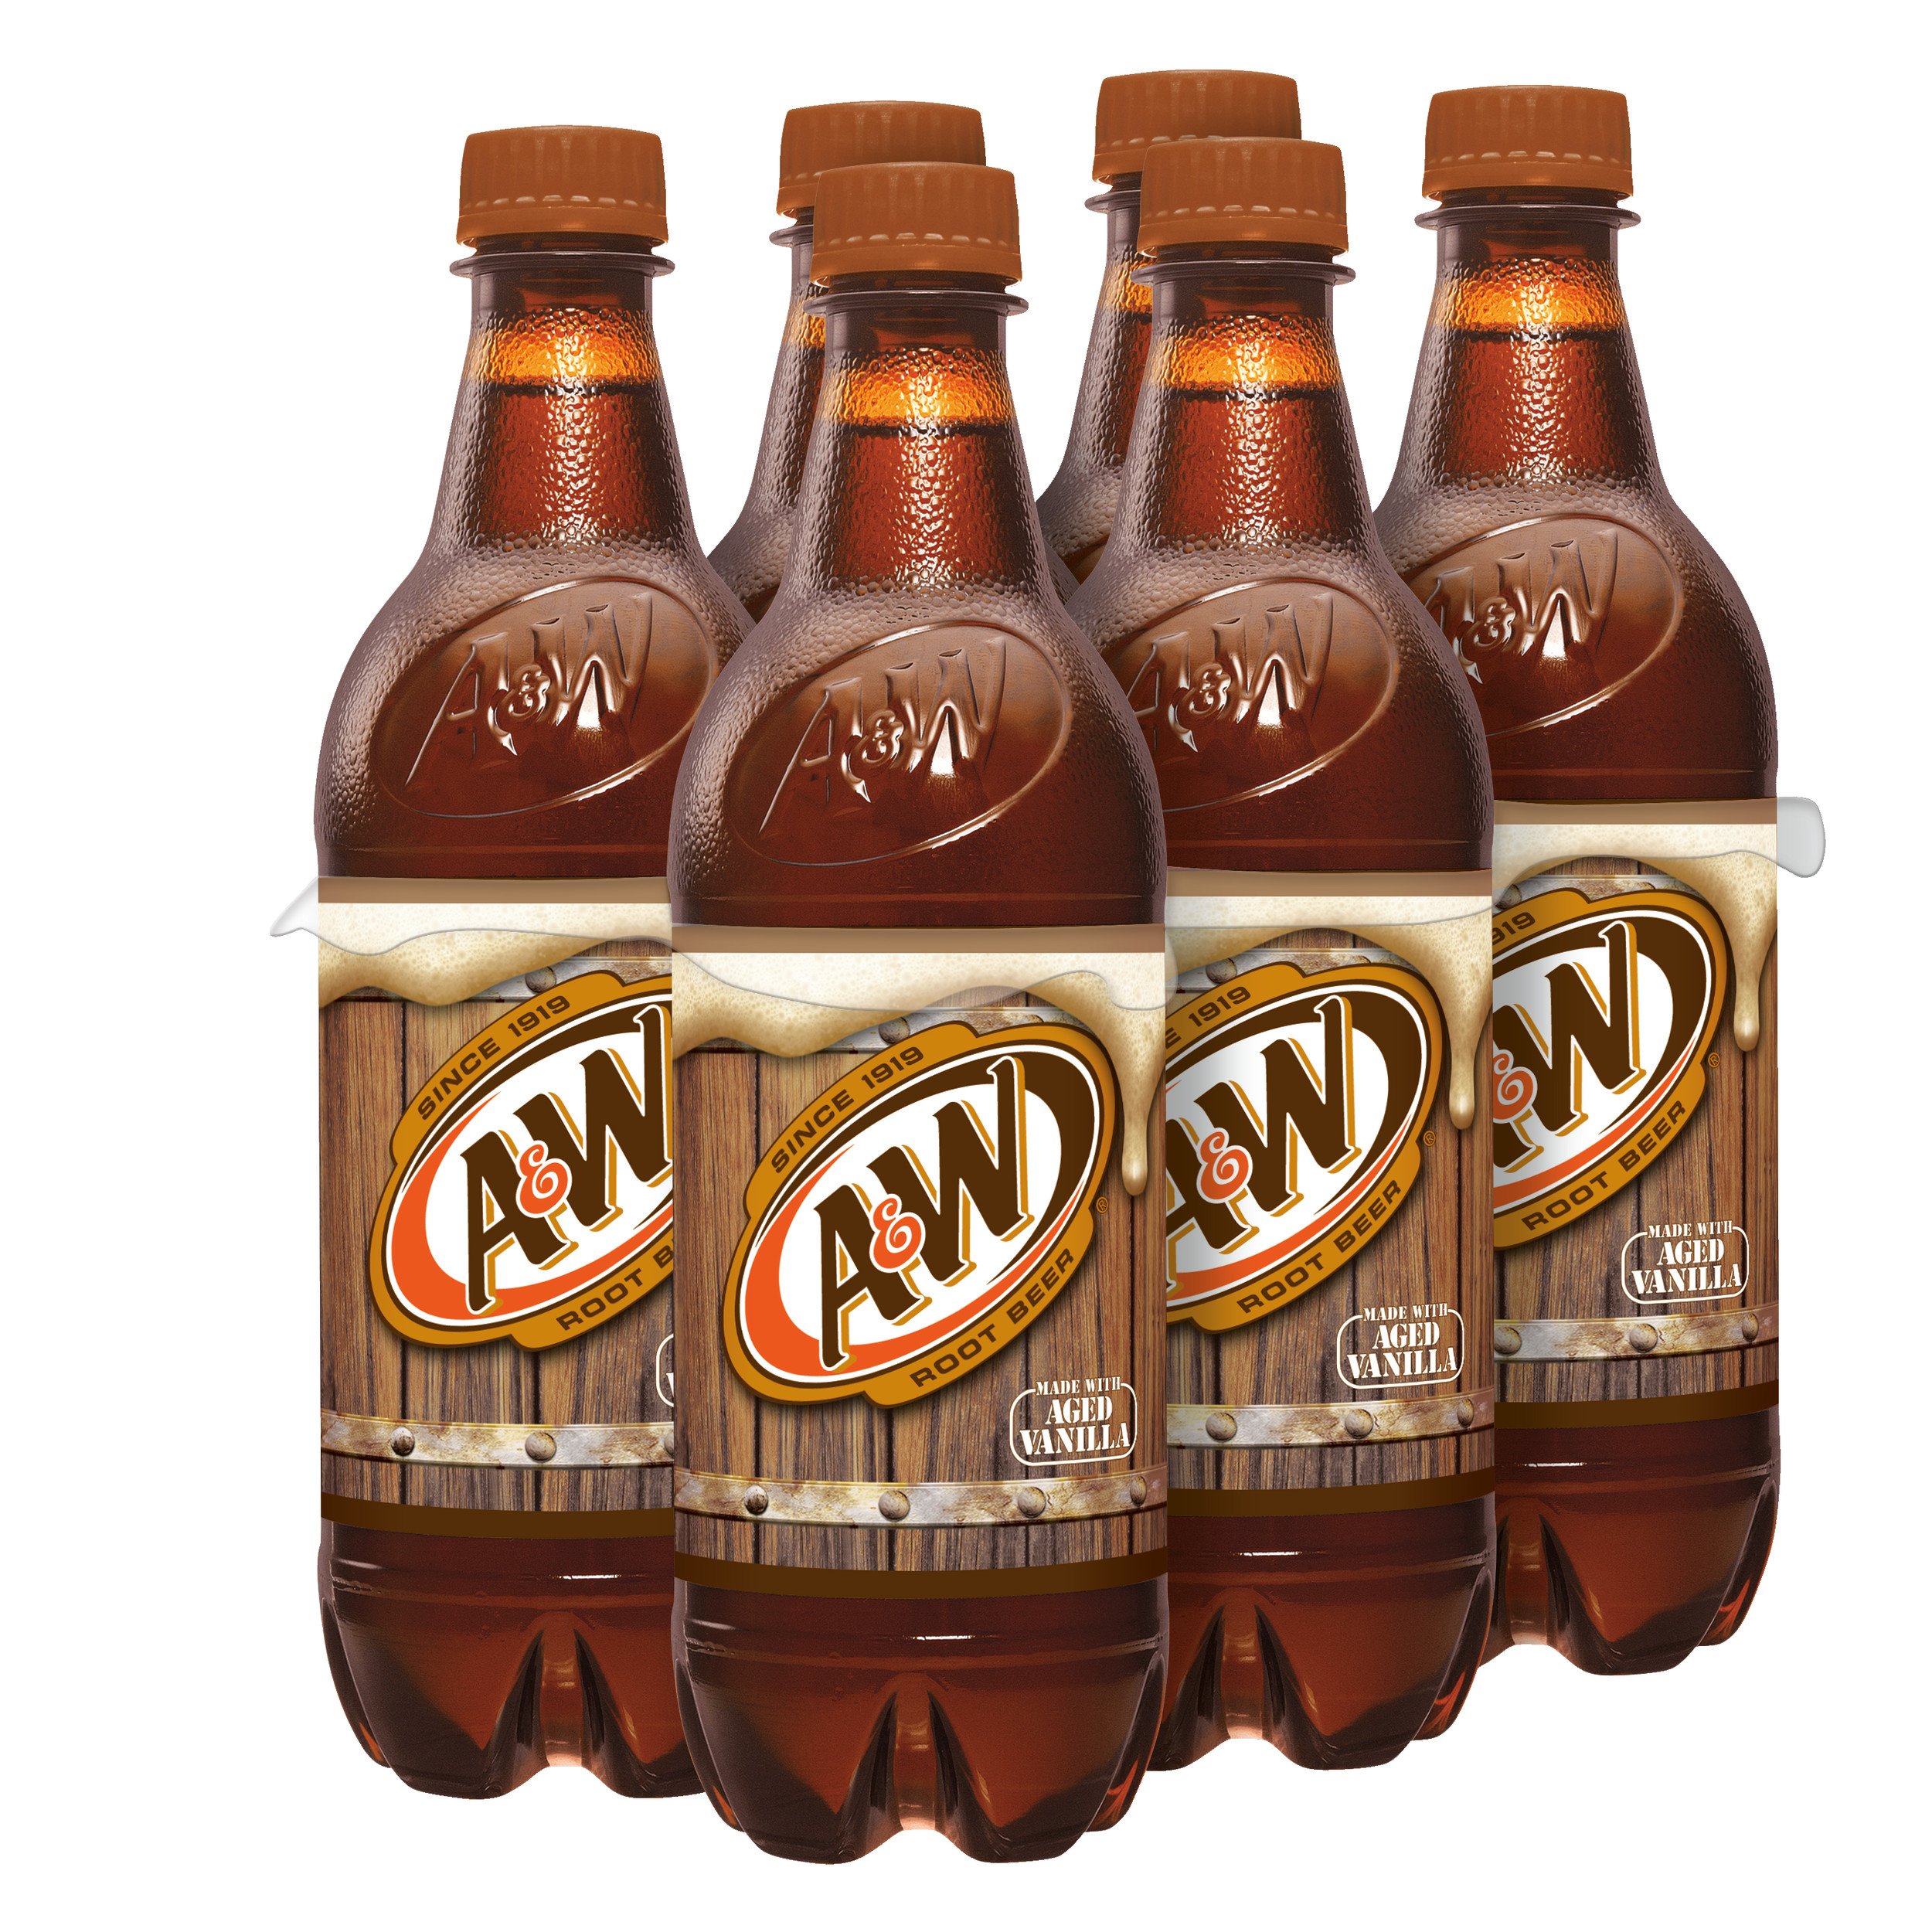 A&W Root Beer 16.9 oz Bottles - Shop Soda at H-E-B